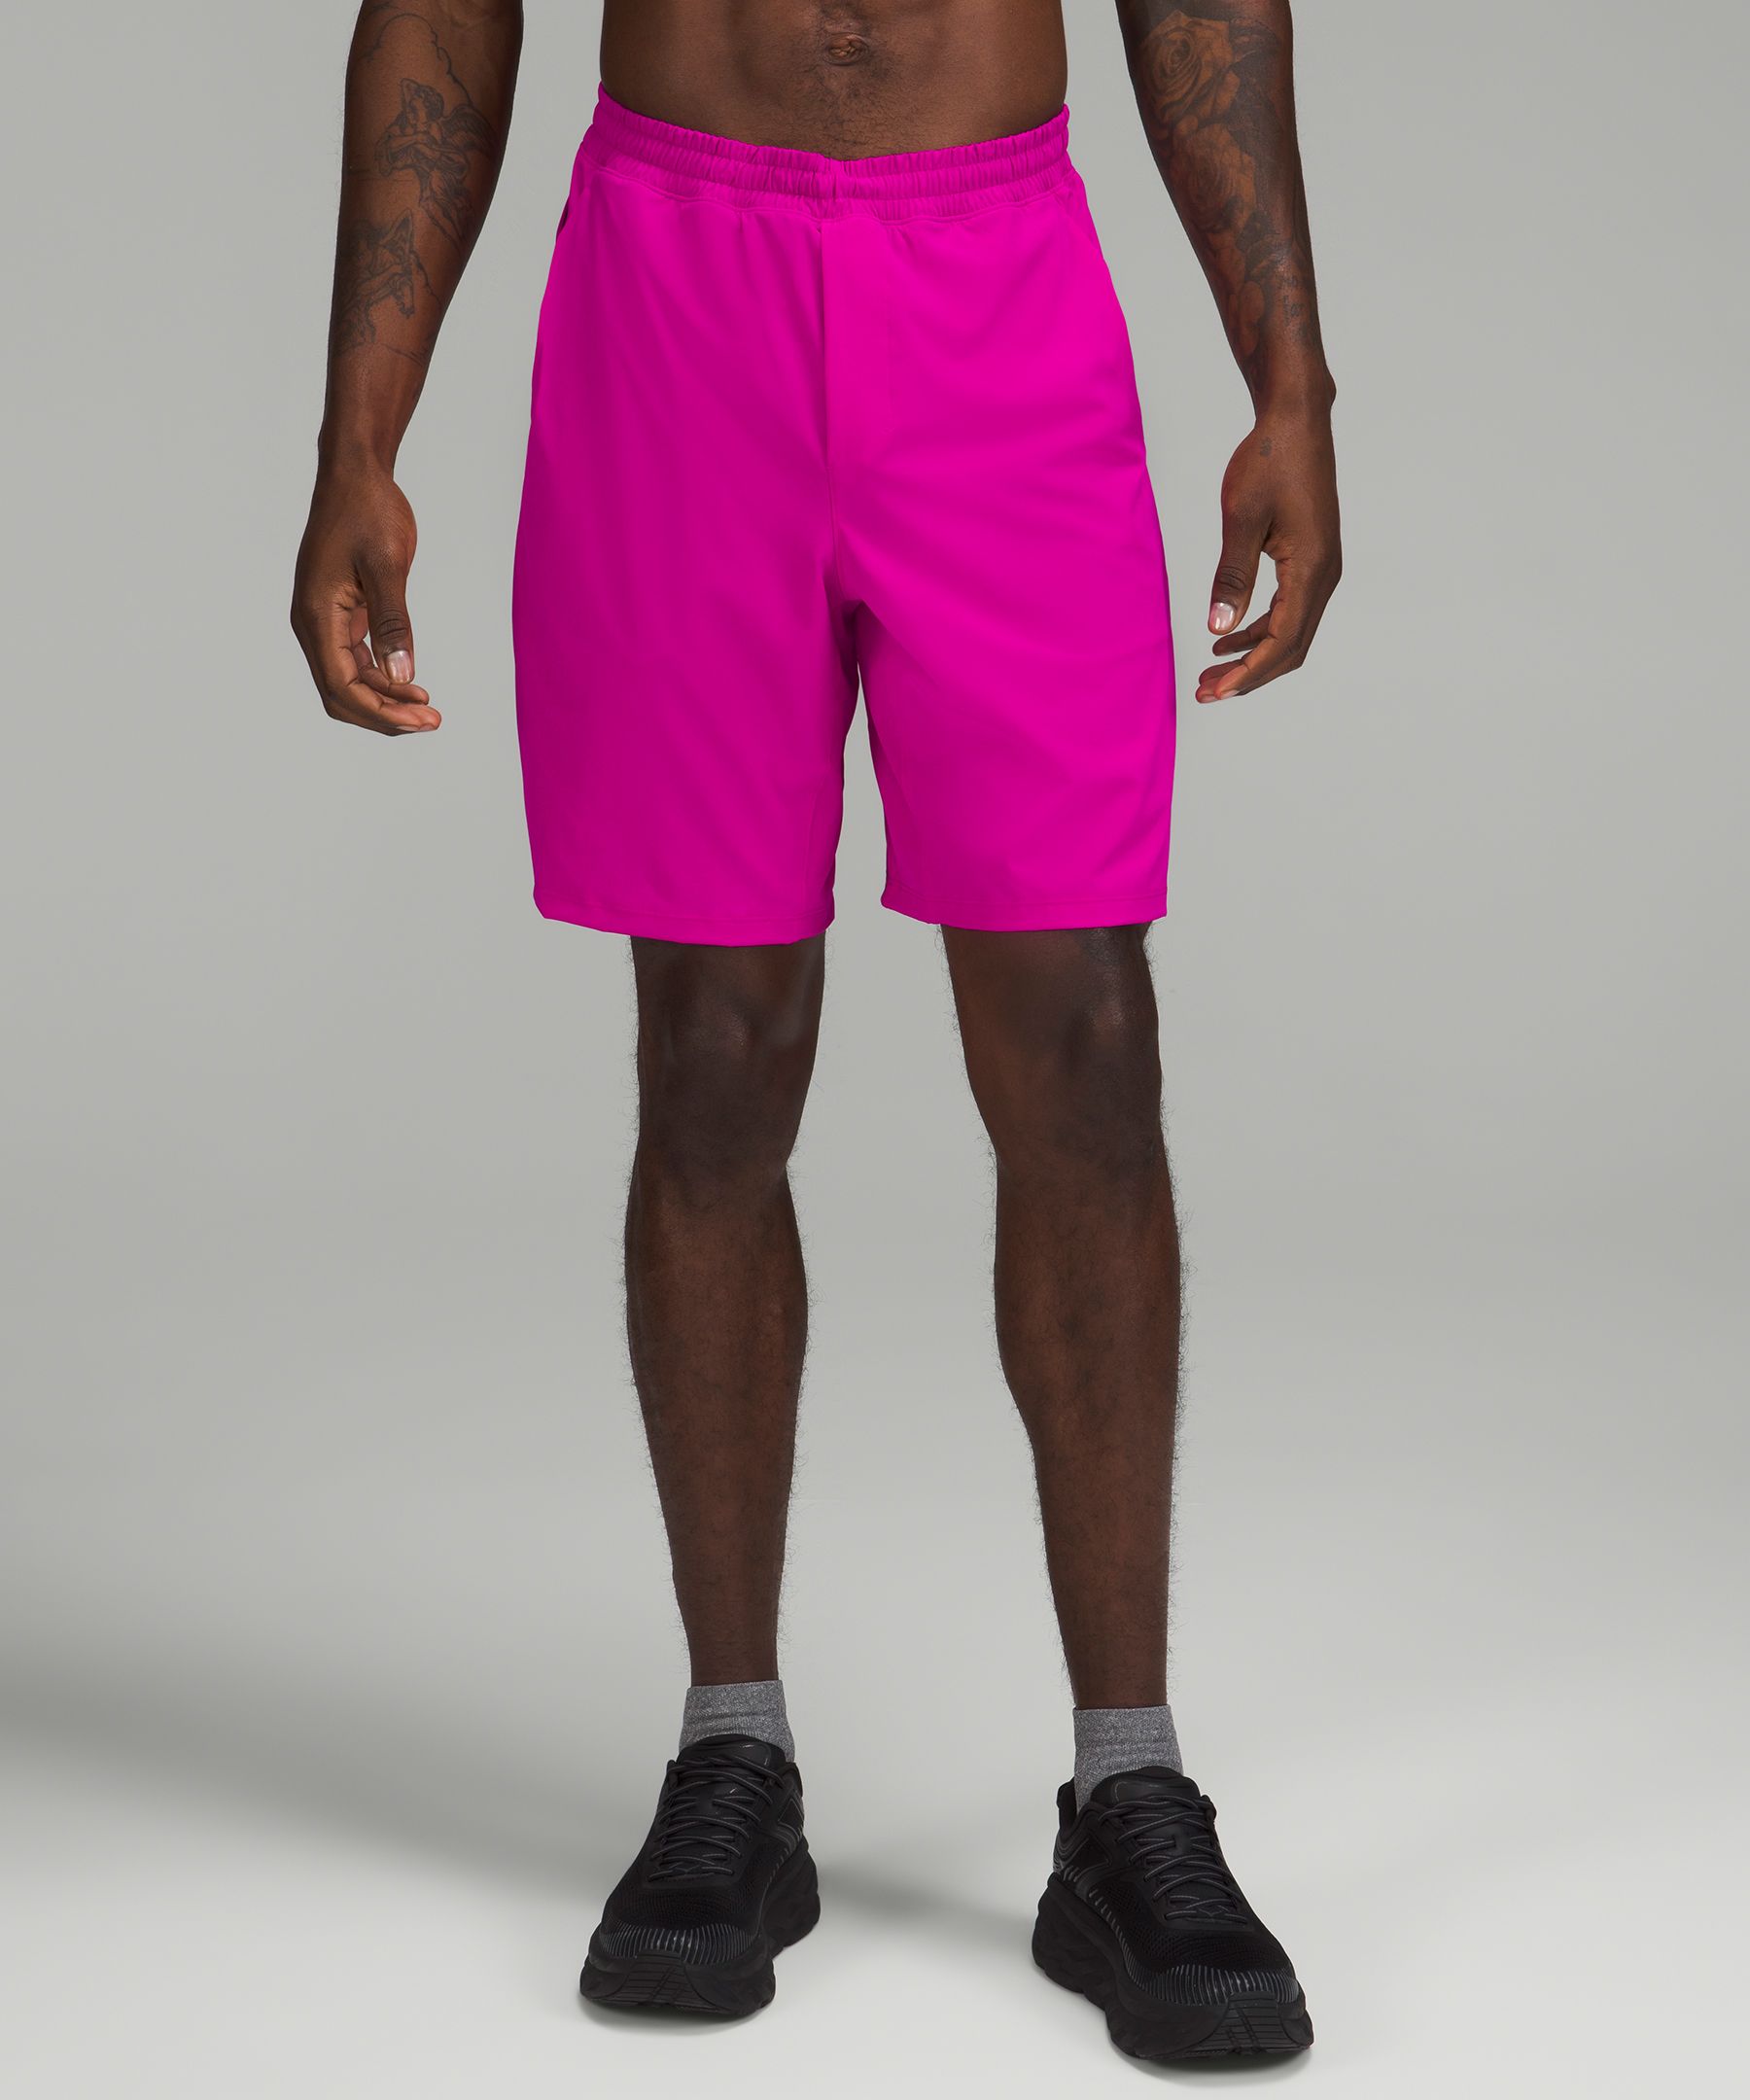 Lululemon Pace Breaker Lined Shorts 9" In Purple Highlight